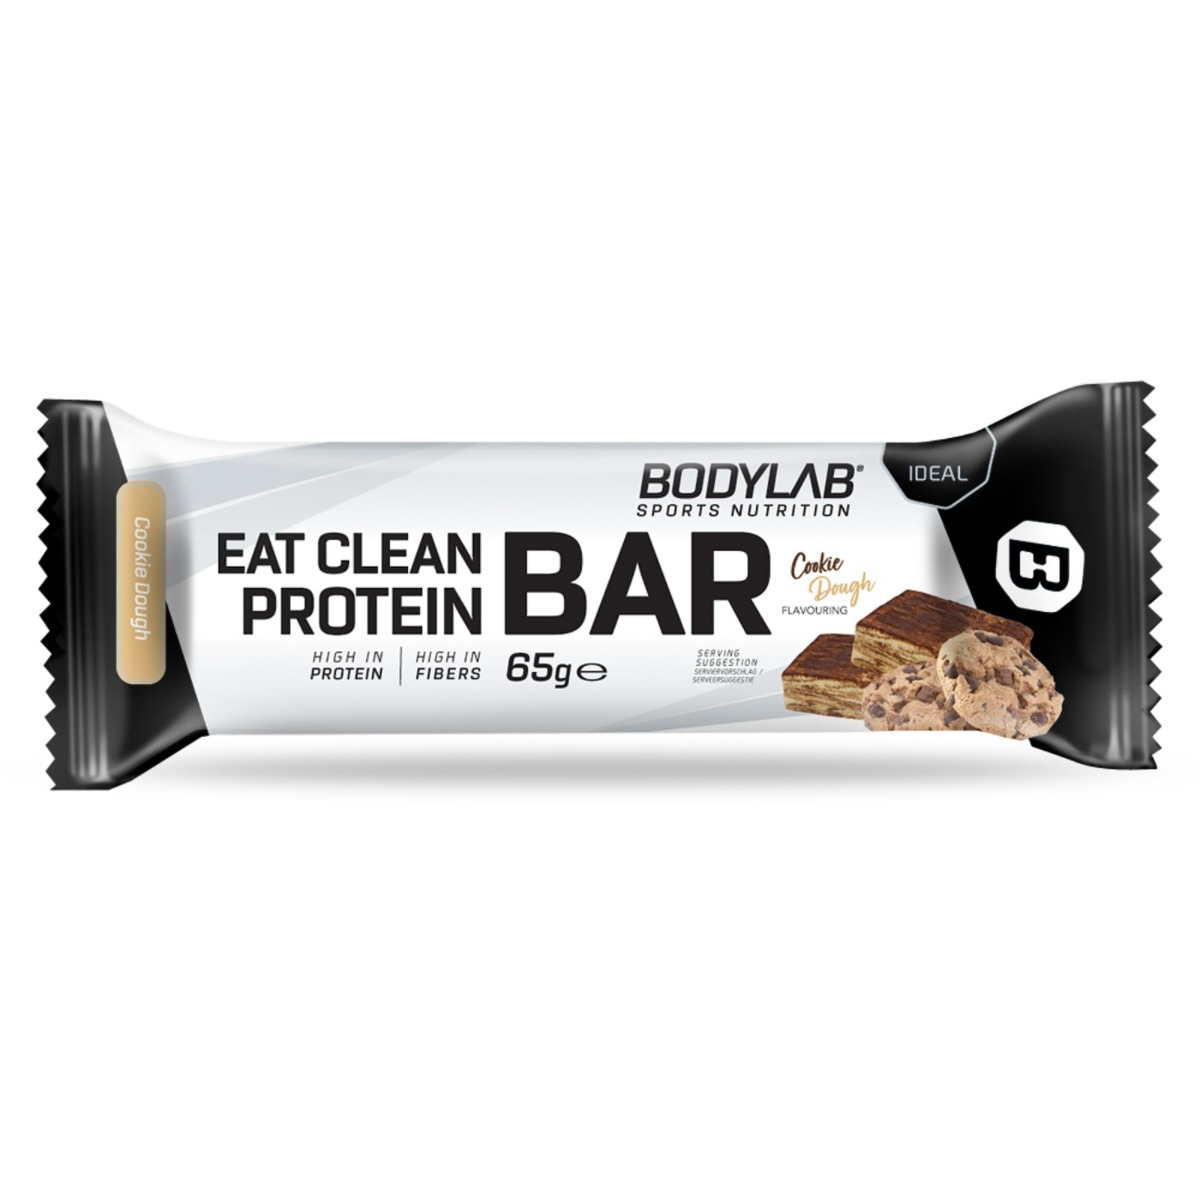 Proteinová tyčinka Eat Clean - Bodylab24 cookie těsto 65 g